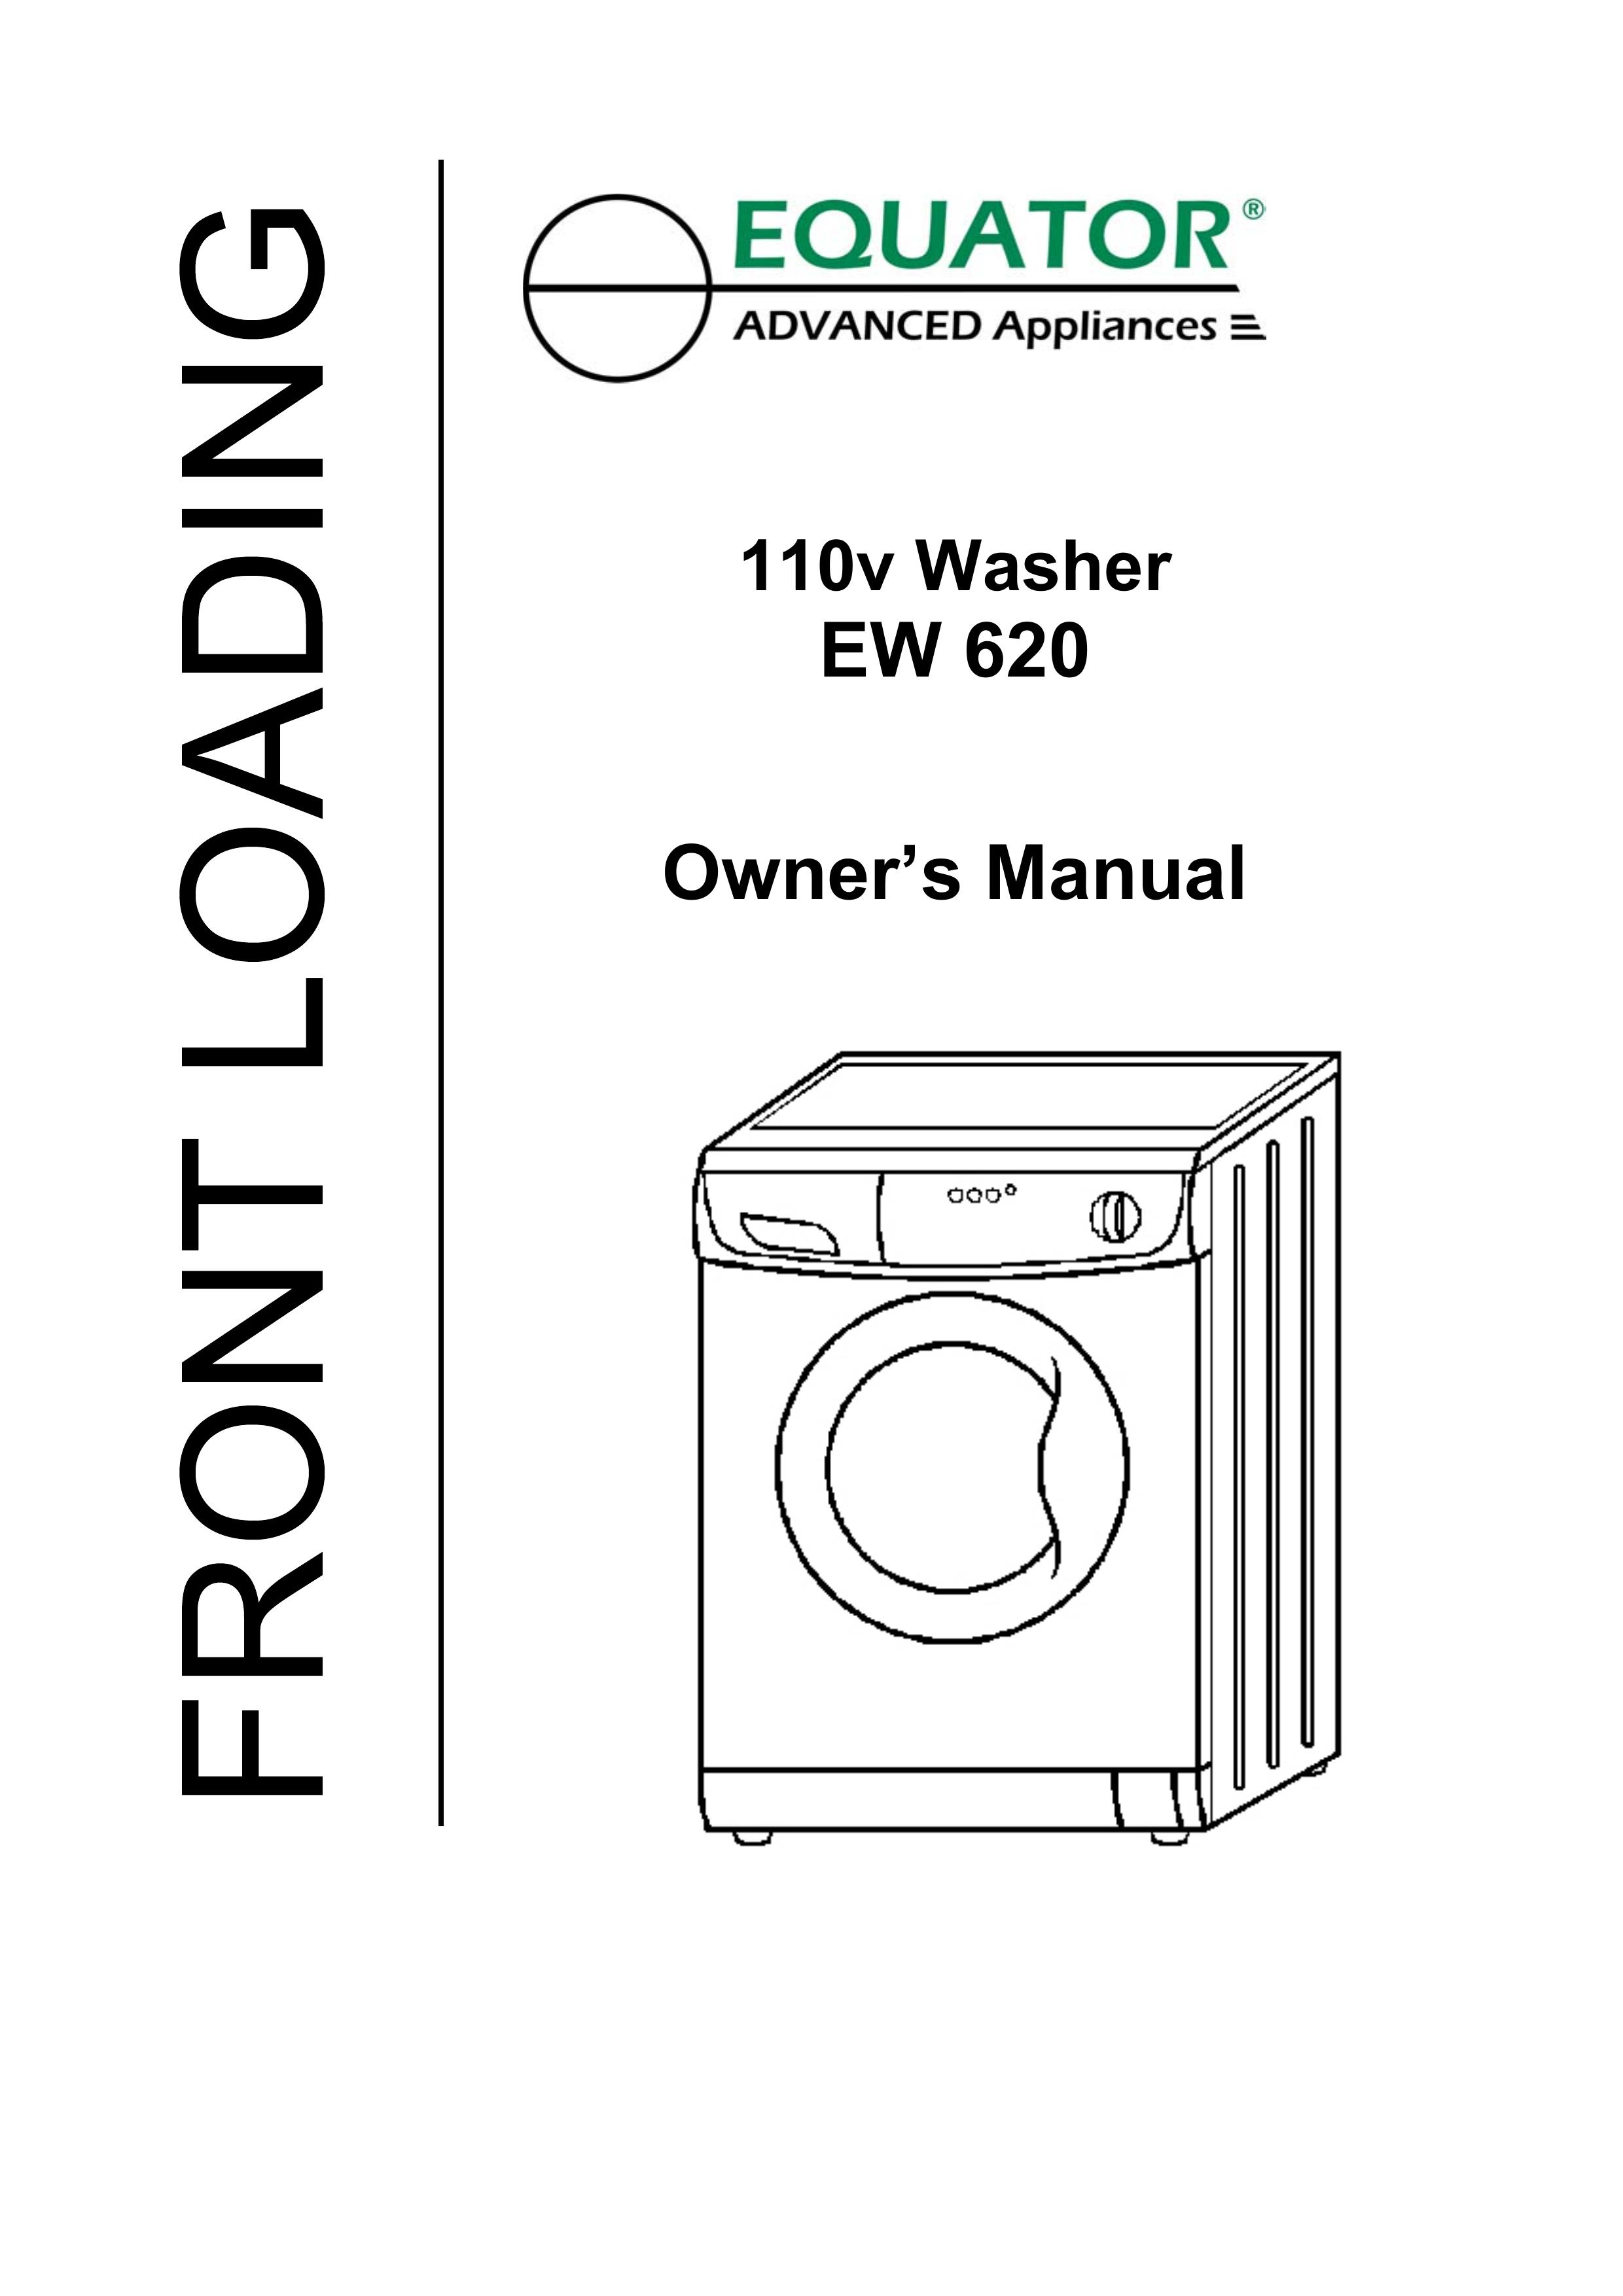 Equator EW 620 Washer User Manual